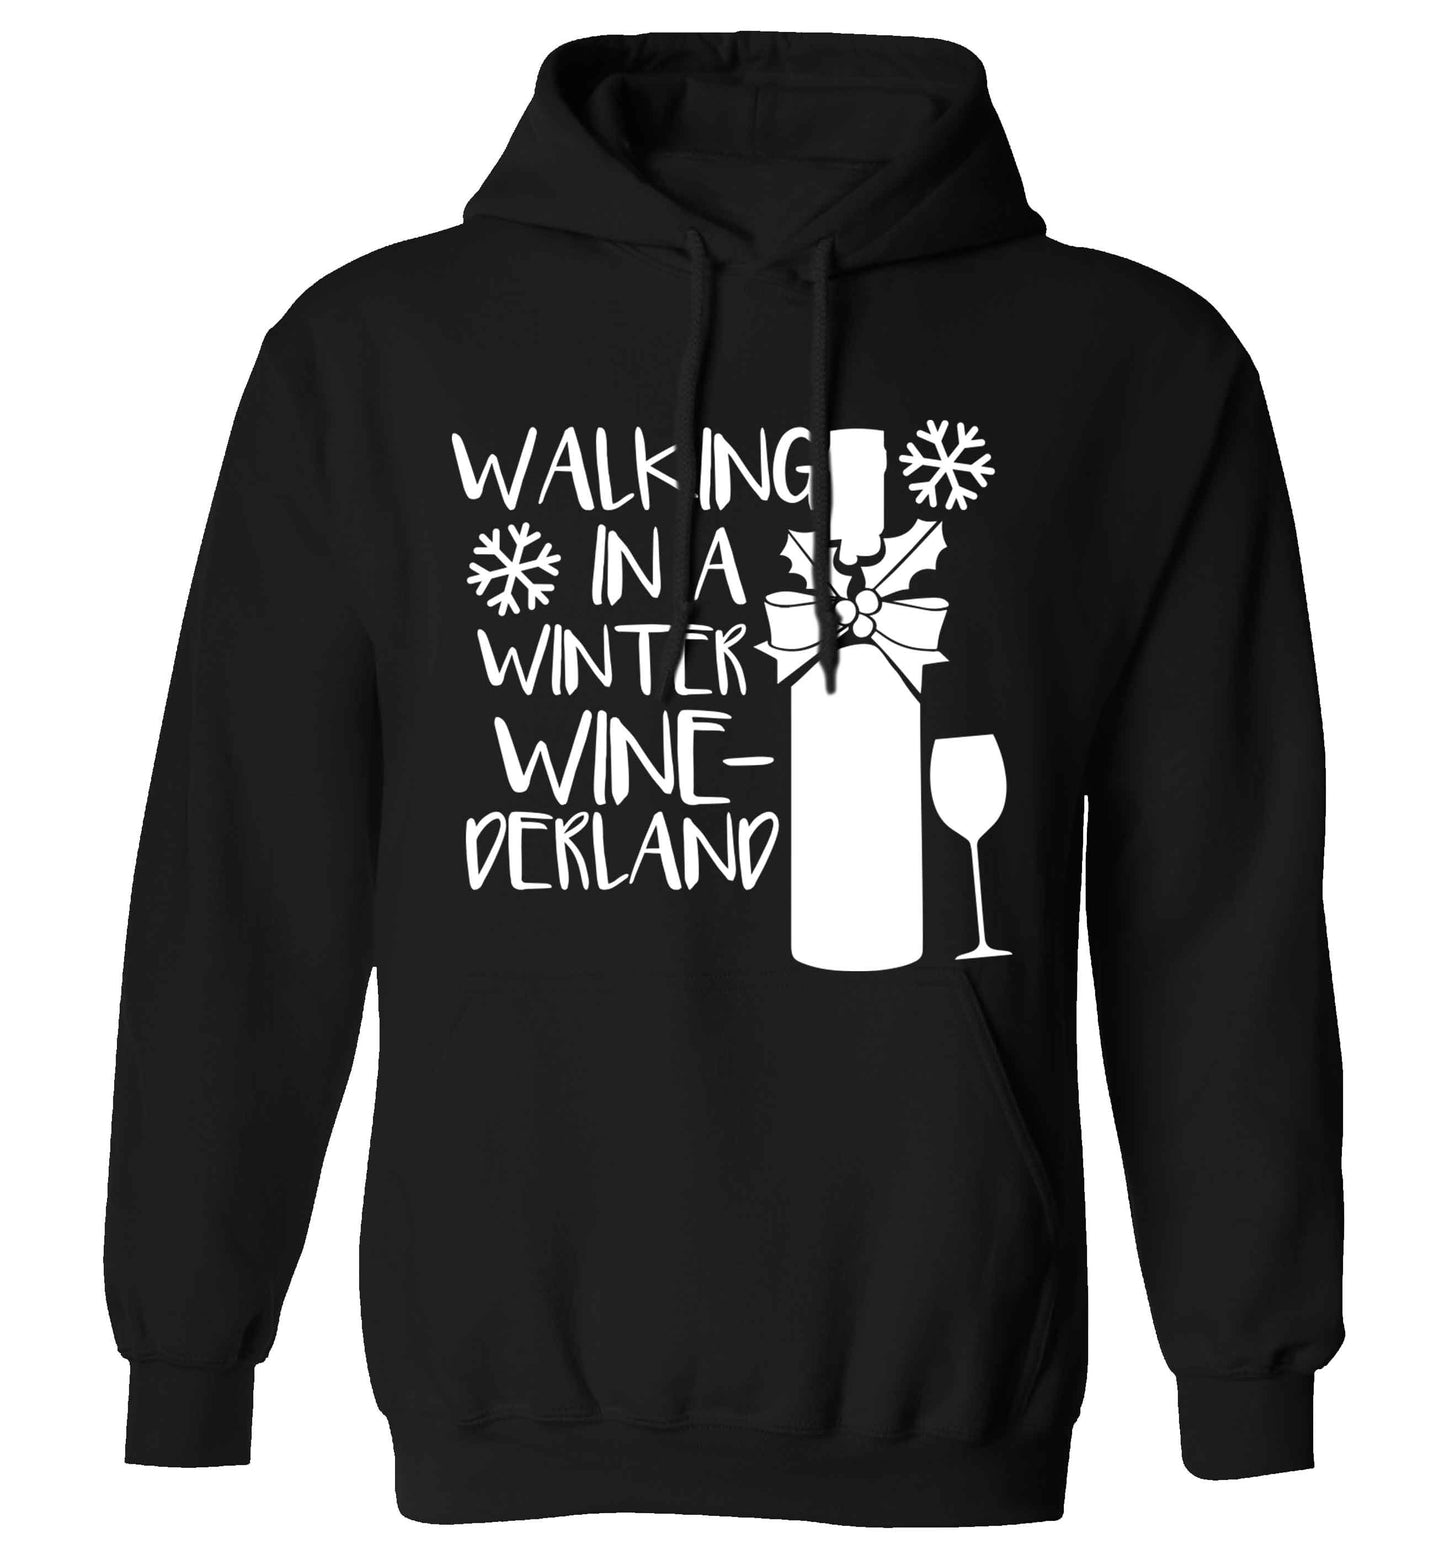 Walking in a wine-derwonderland adults unisex black hoodie 2XL